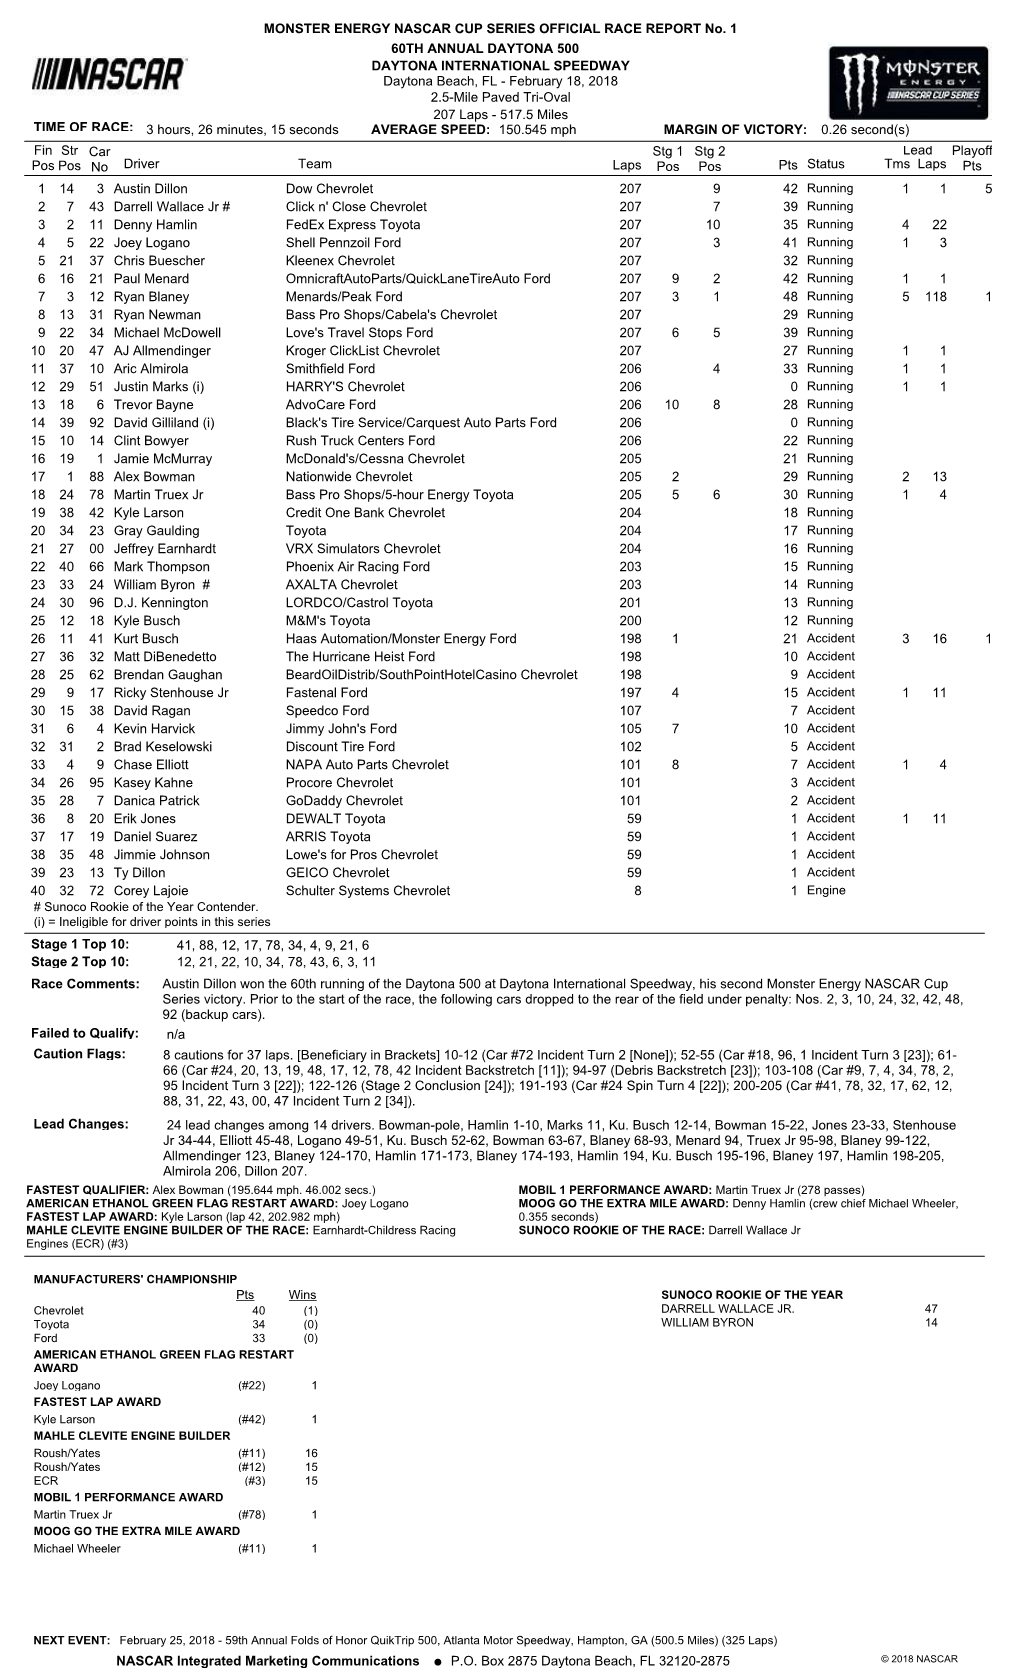 Official Race & Points Report (Pdf)